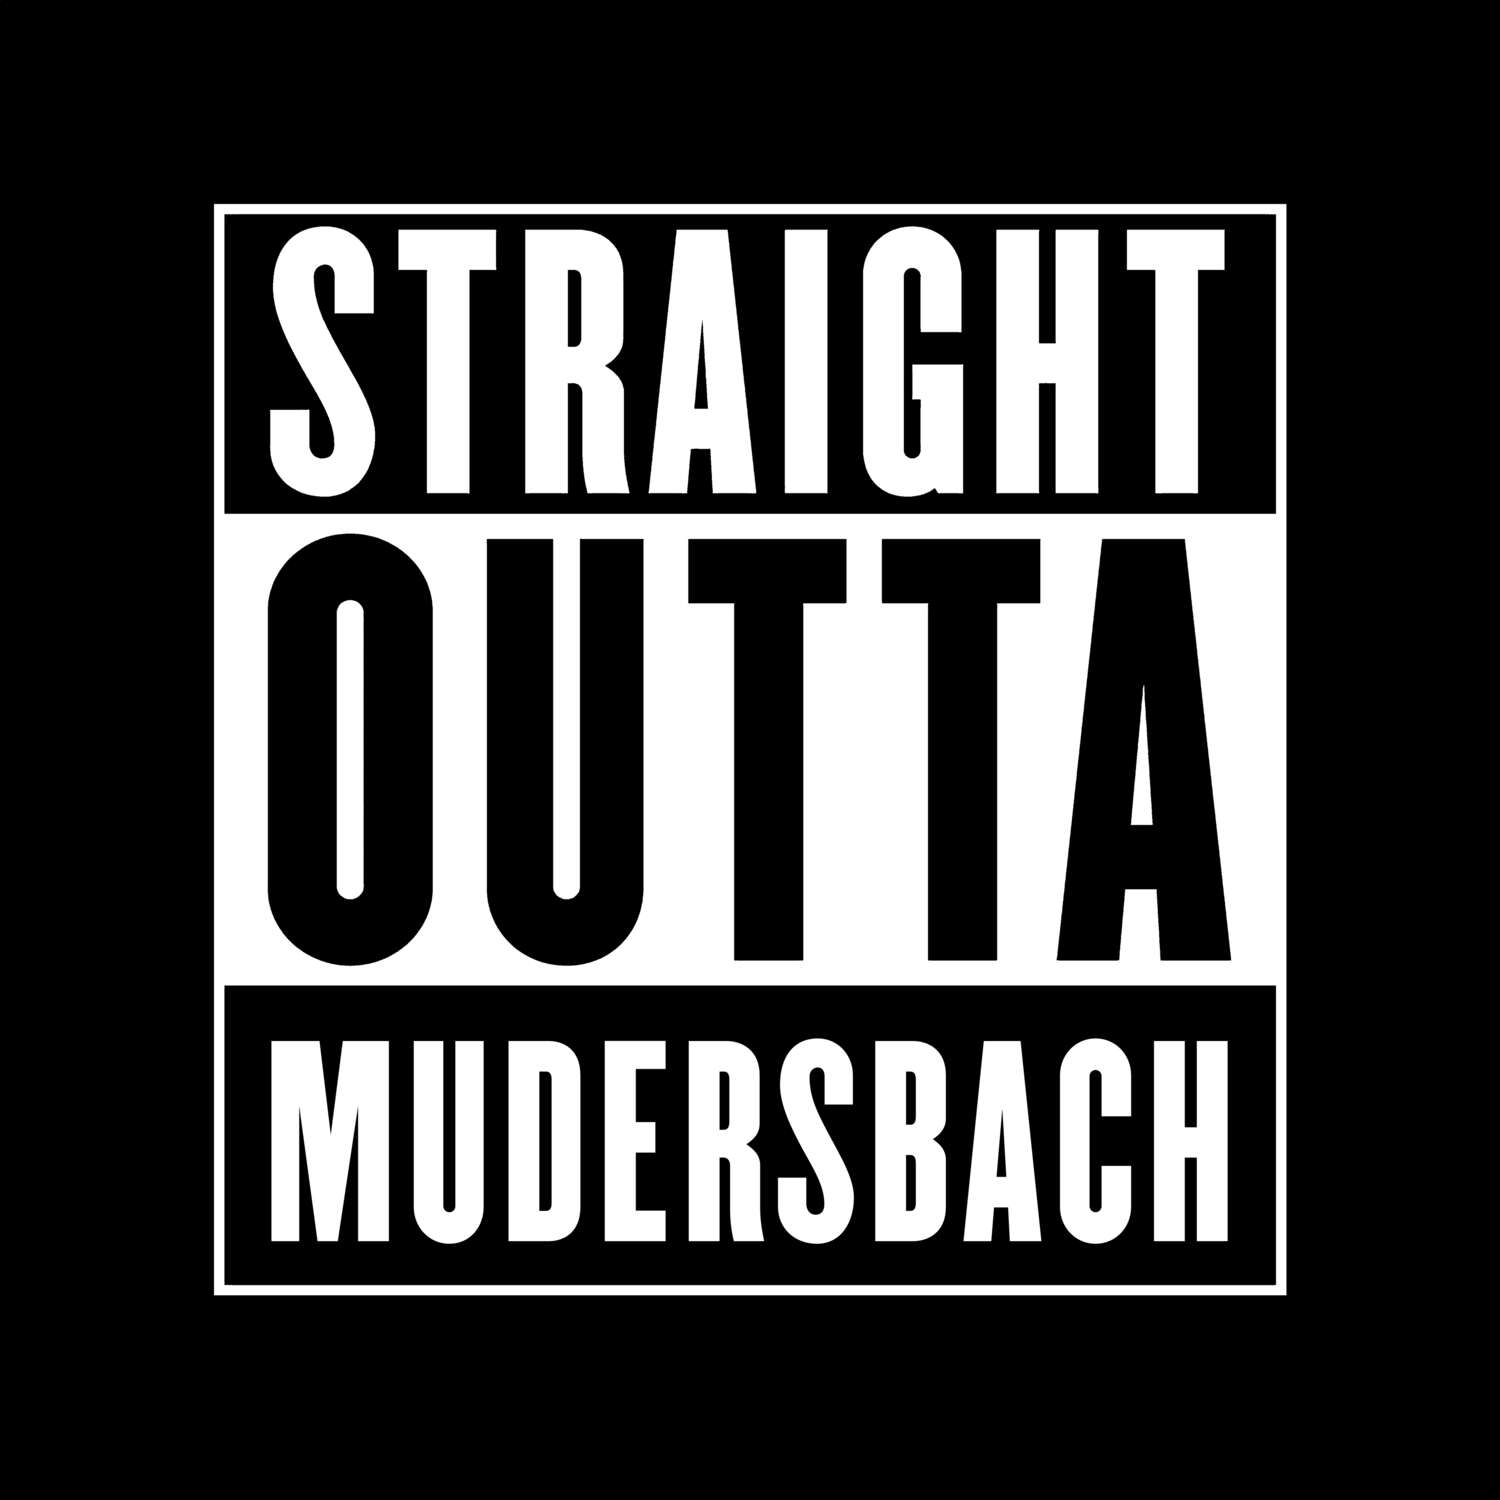 Mudersbach T-Shirt »Straight Outta«